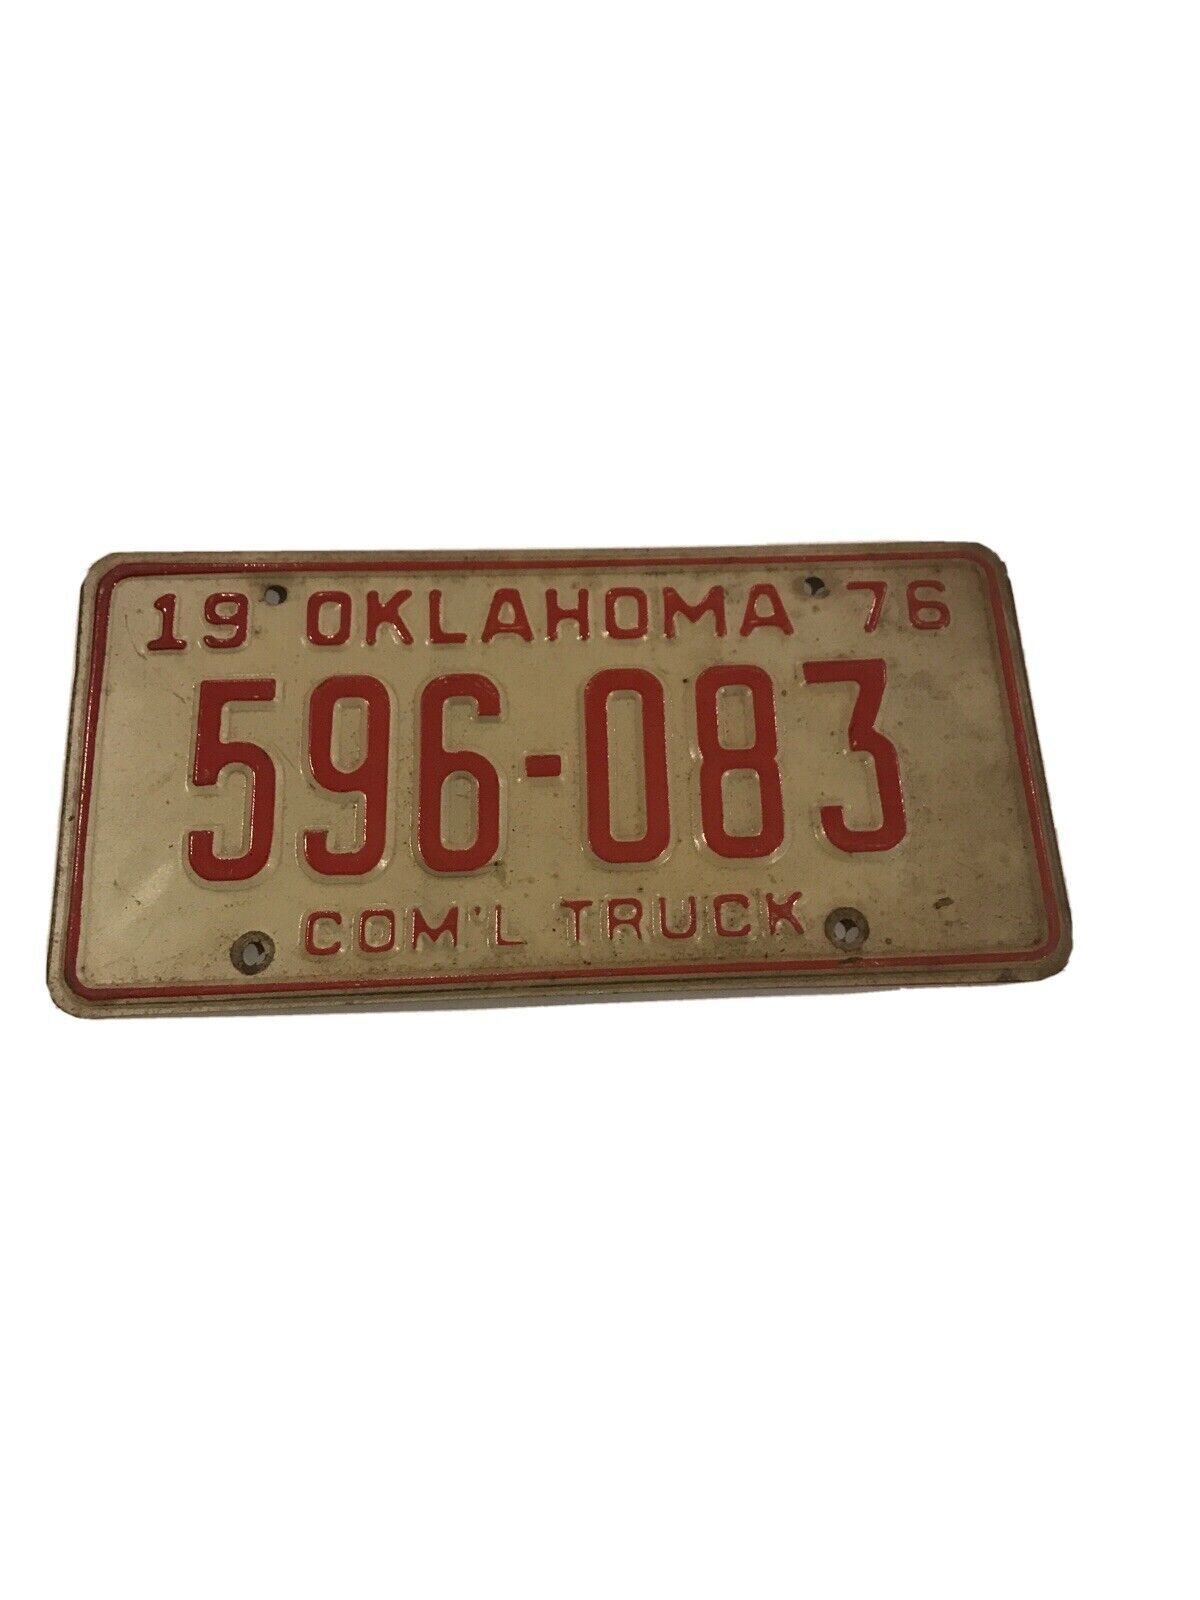 Vintage 1976 Oklahoma License Plate Tag 596-083 Com Truck